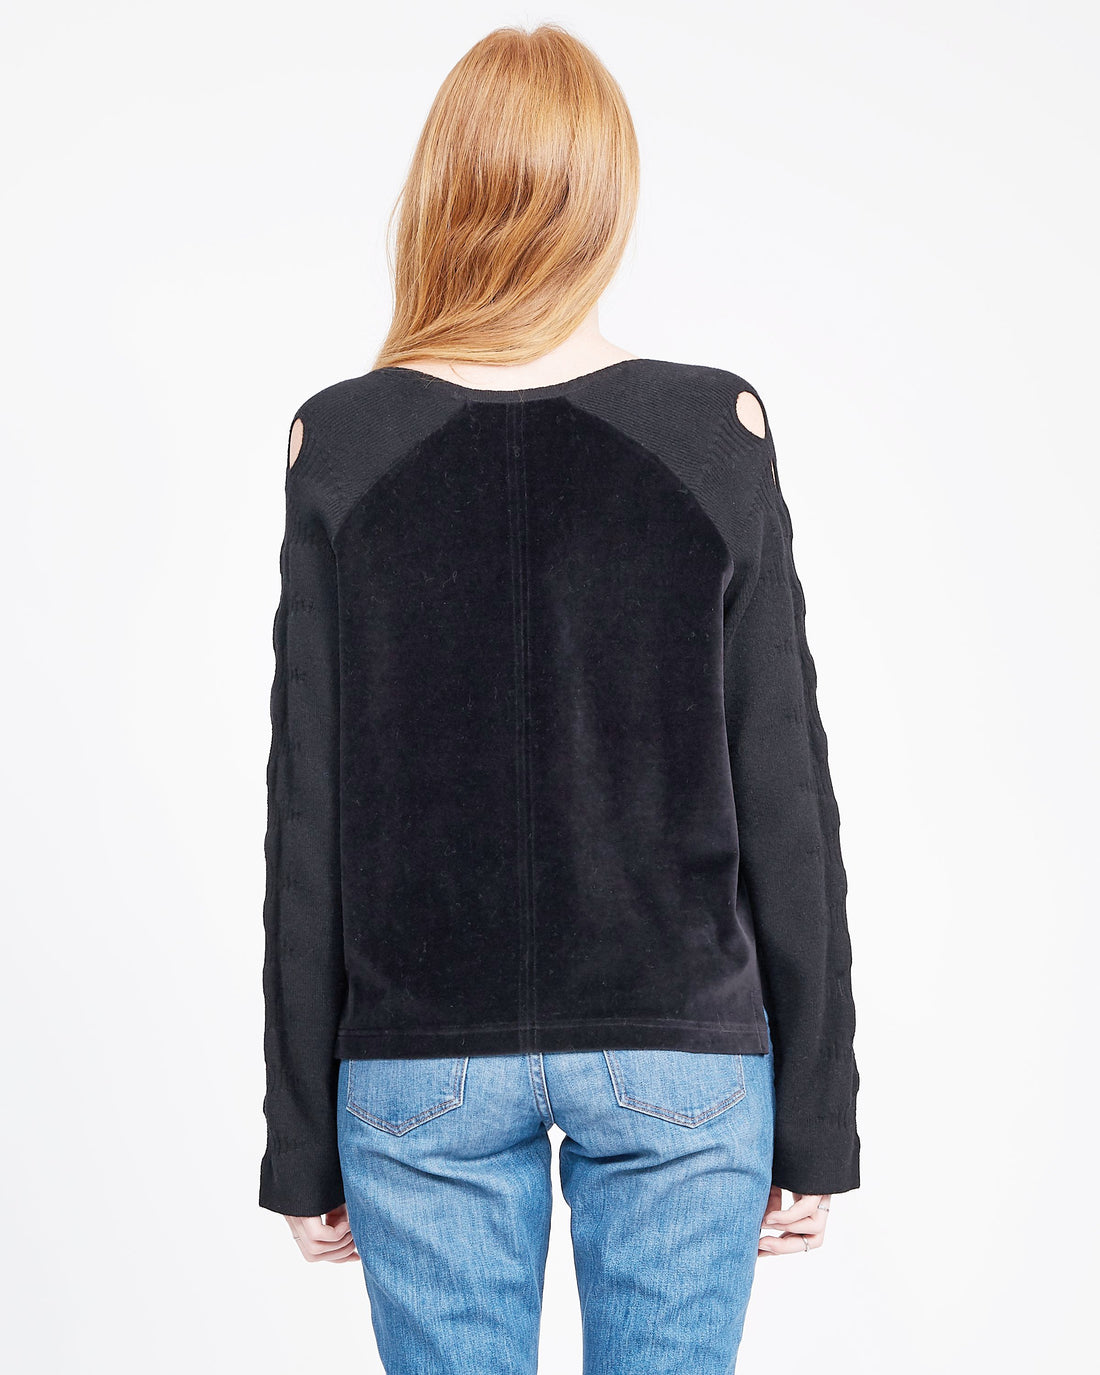 women's black cashmere sweatshirt